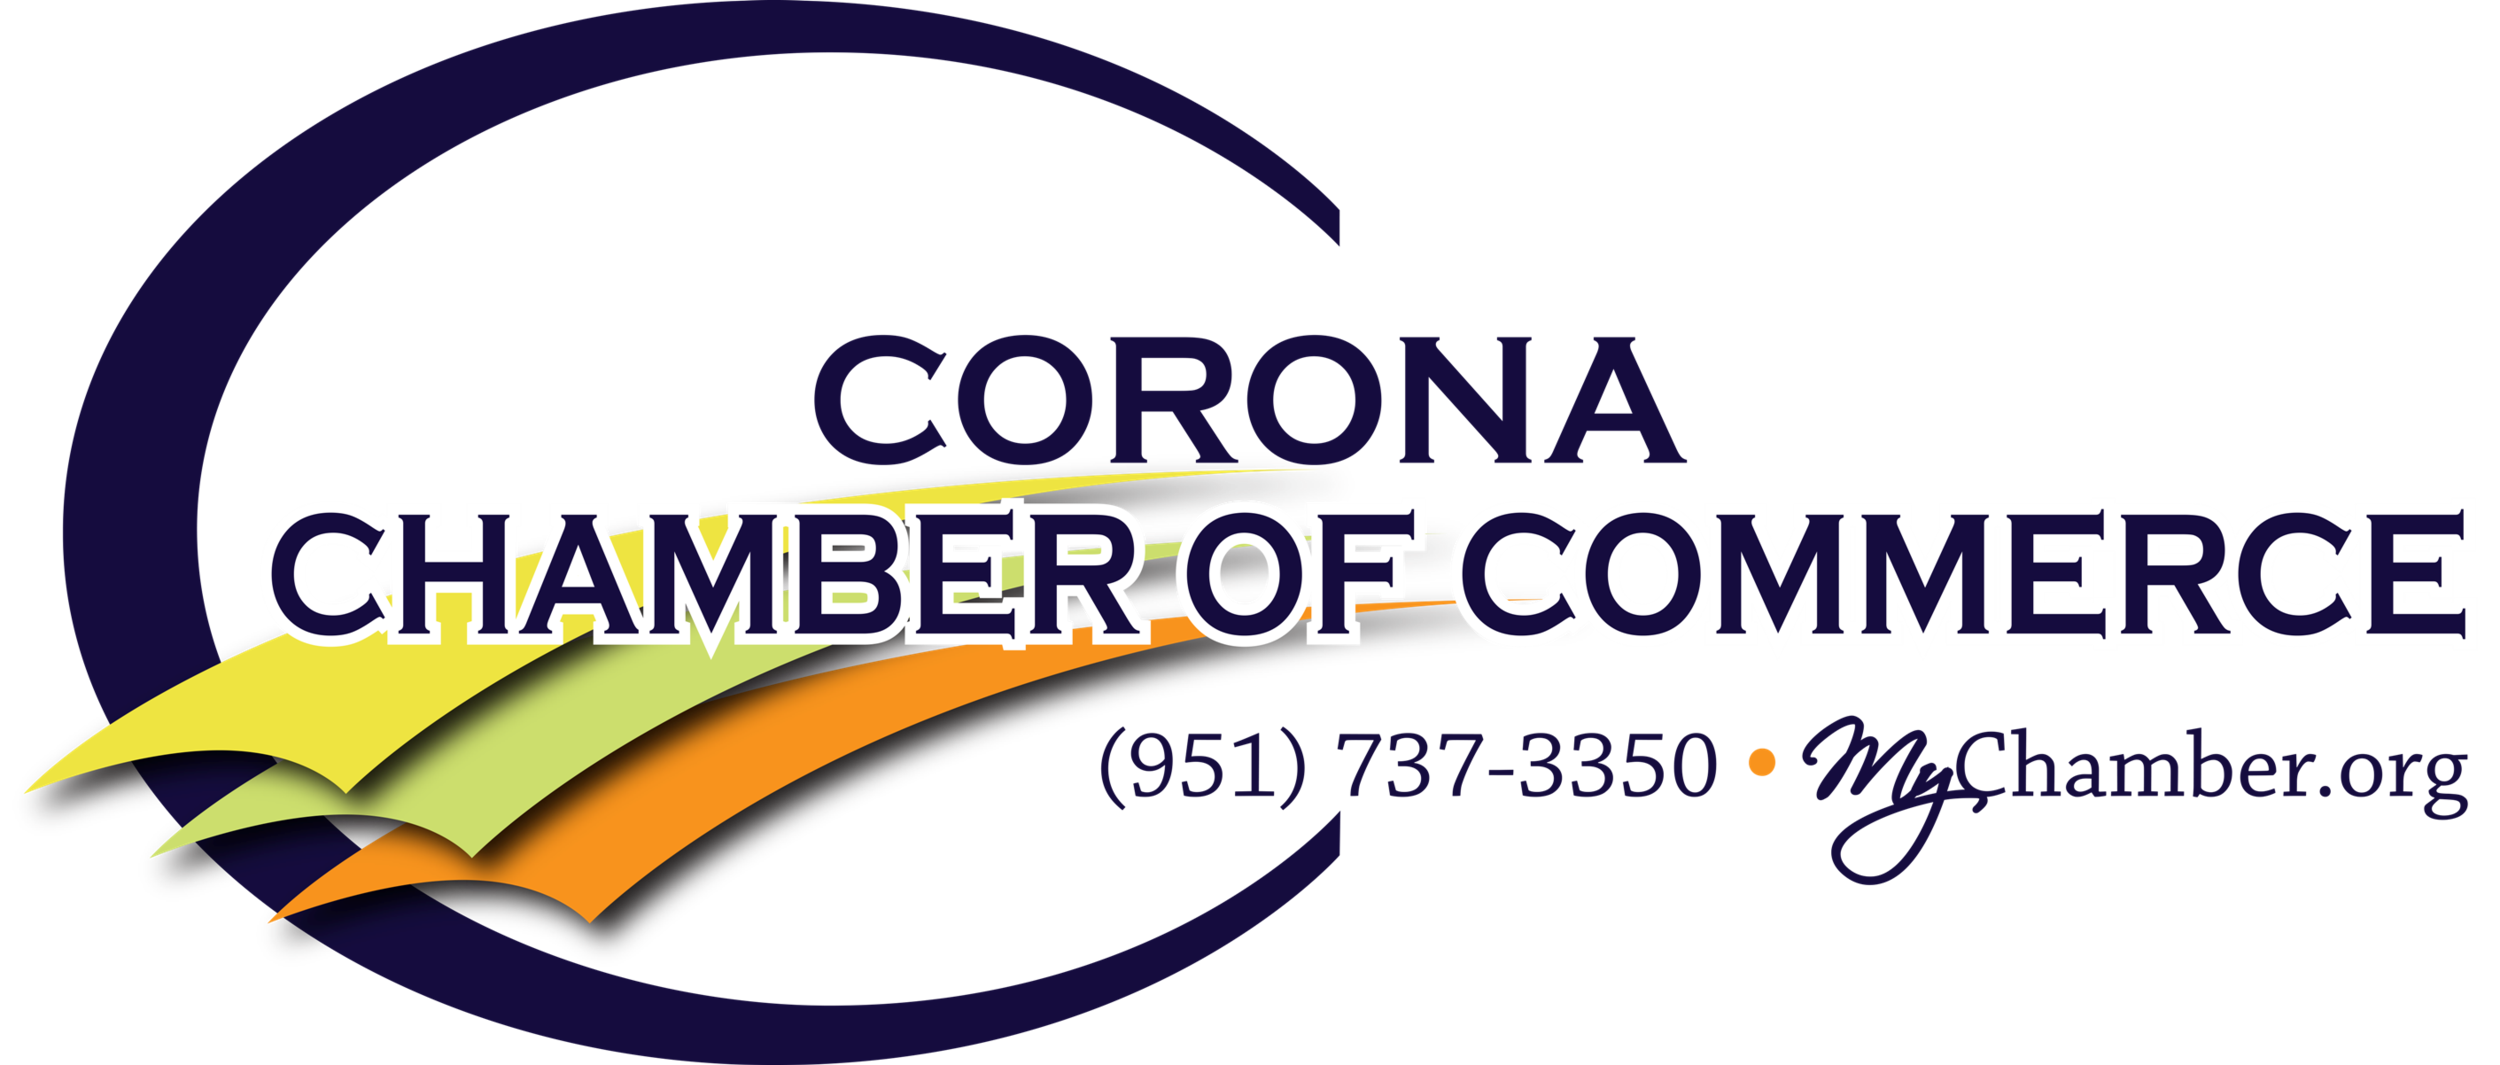 Corona Chamber of Commerce Banner Logo - Regular (Transparent) -  small.png